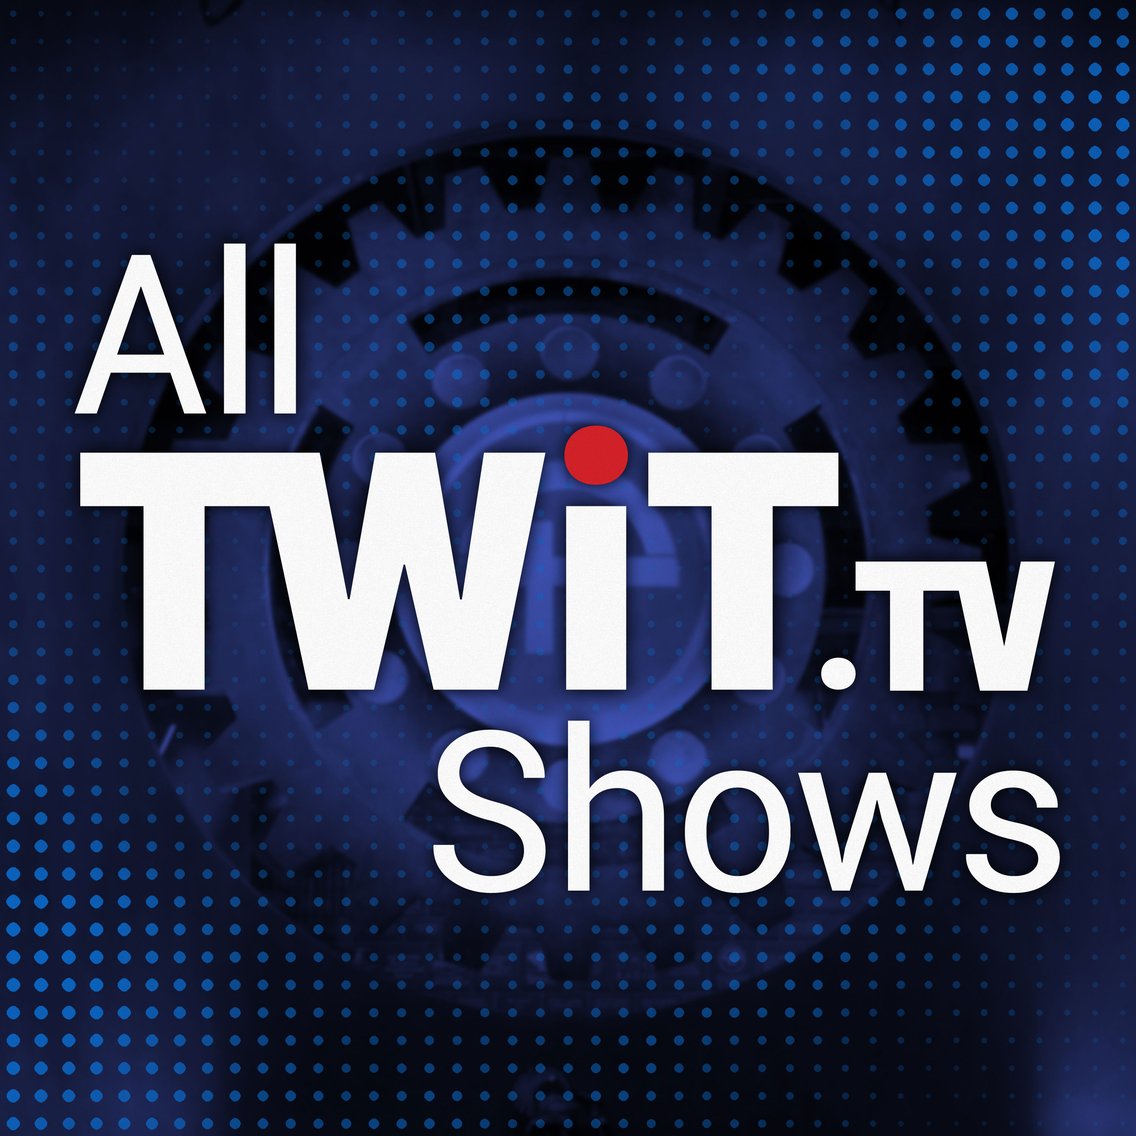 All TWiT.tv Shows - imagen de portada
